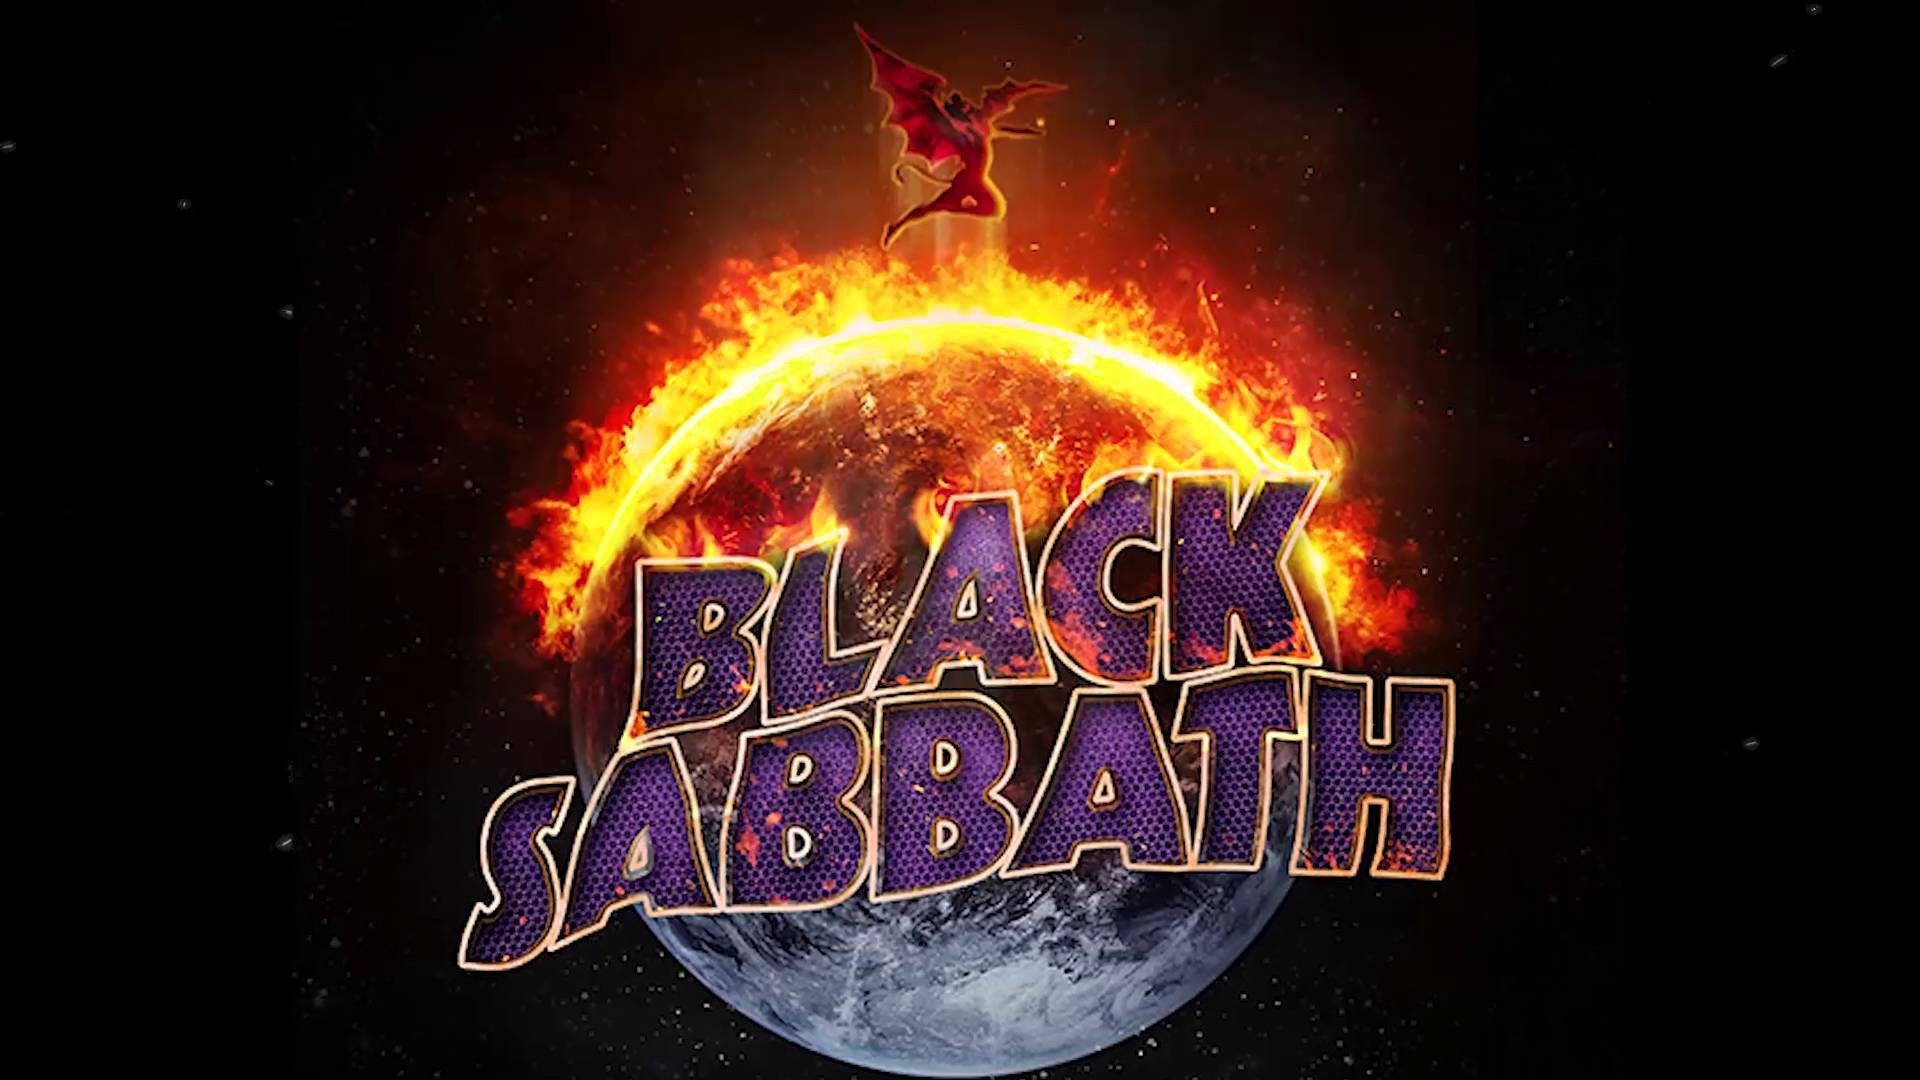 1920x1080  Music - Black Sabbath Ozzy Osbourne Heavy Metal Wallpaper